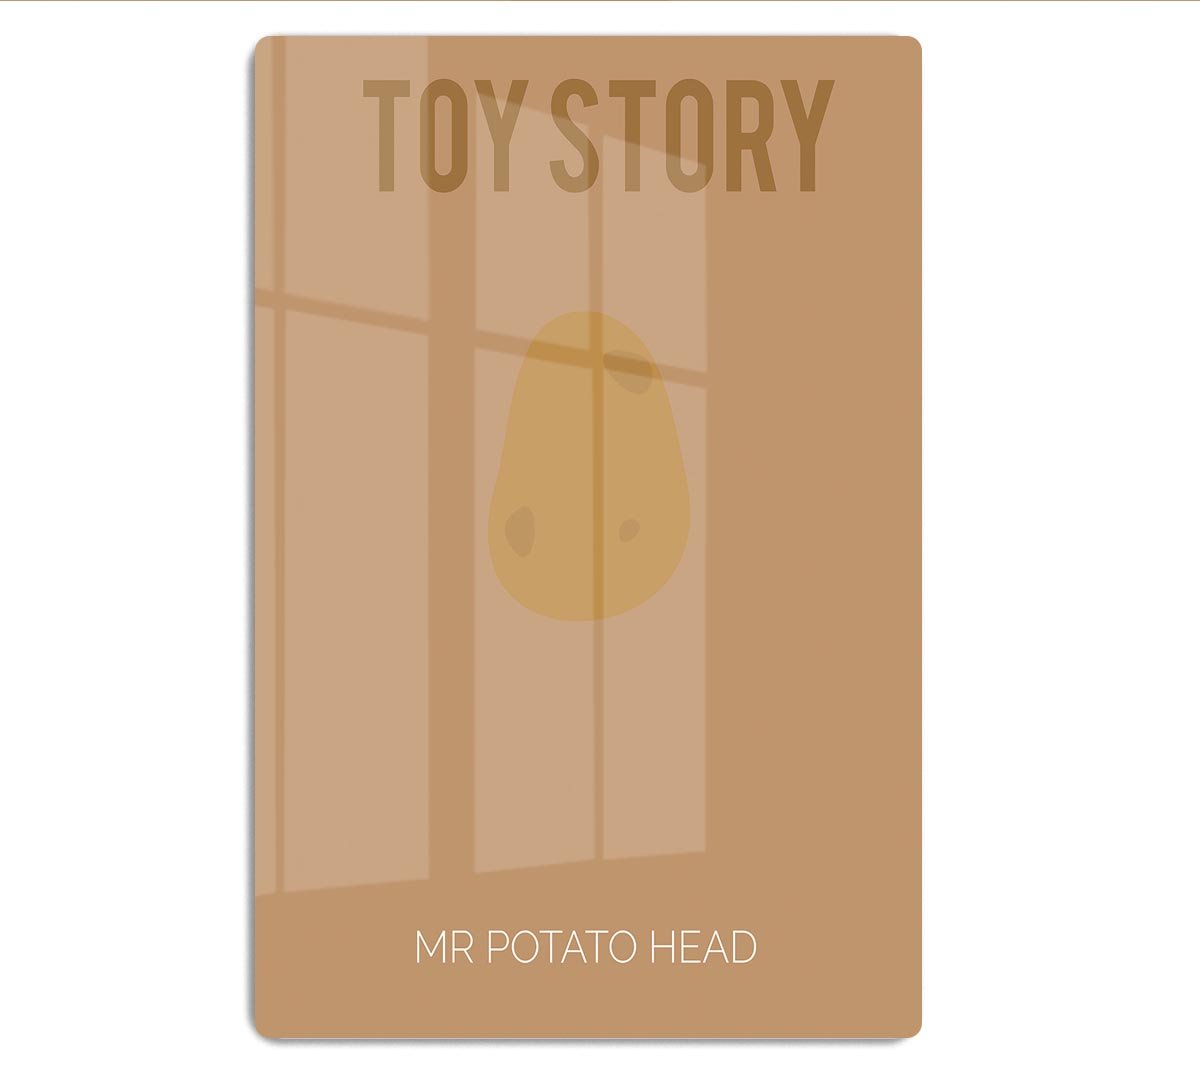 Toy Story Mr Potato Head Minimal Movie HD Metal Print